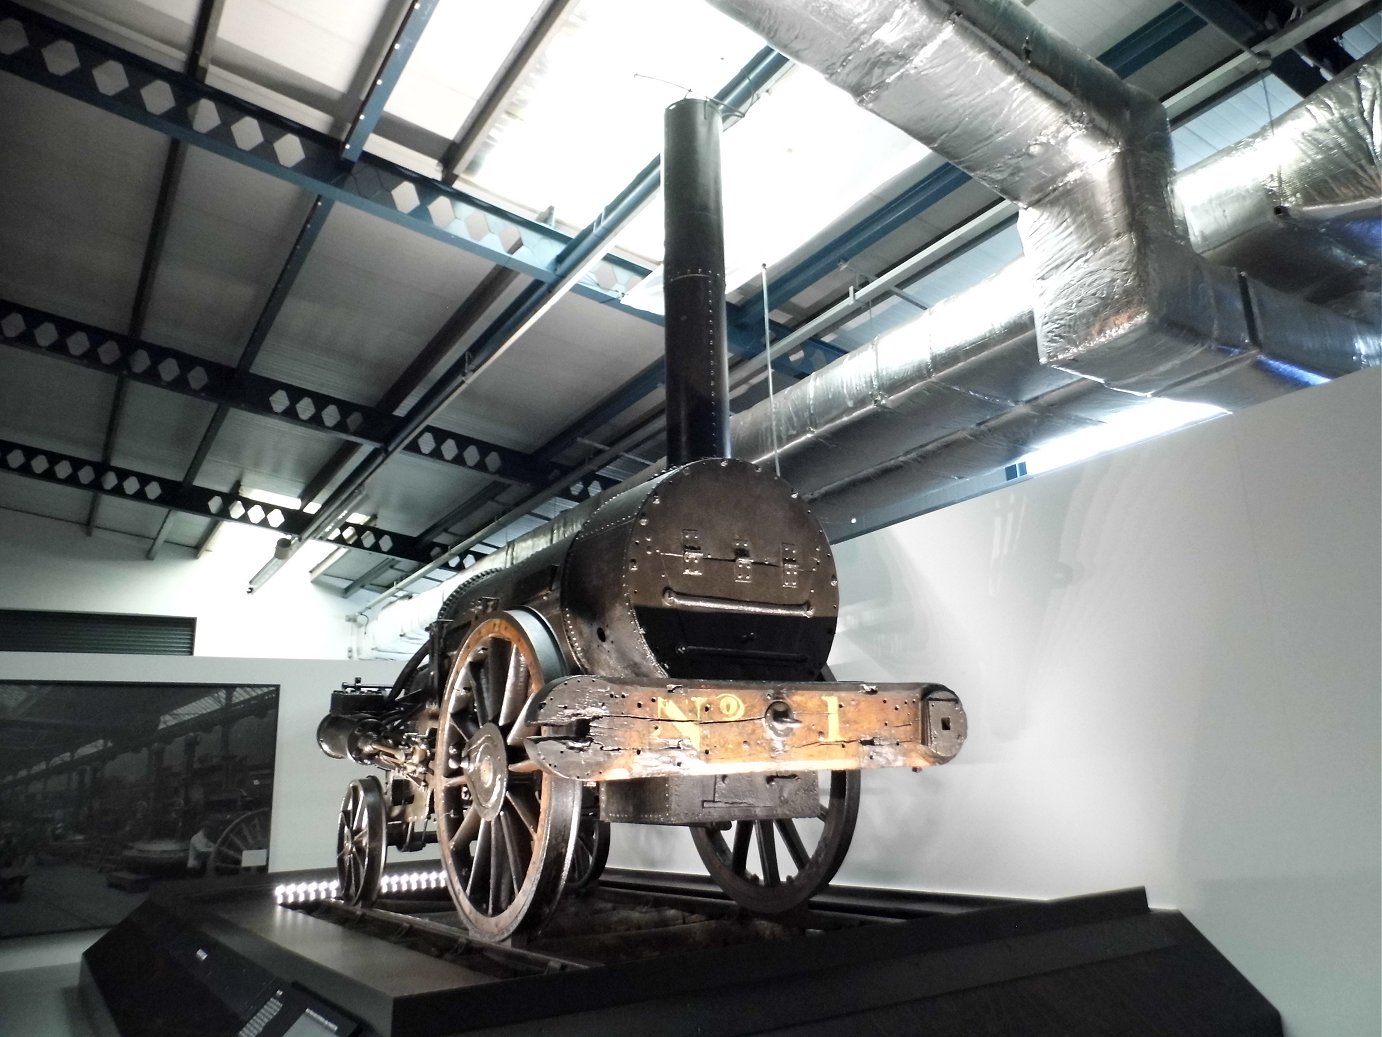 Rocket at the National Raiway Museum, Thurs 10/10/2019. 